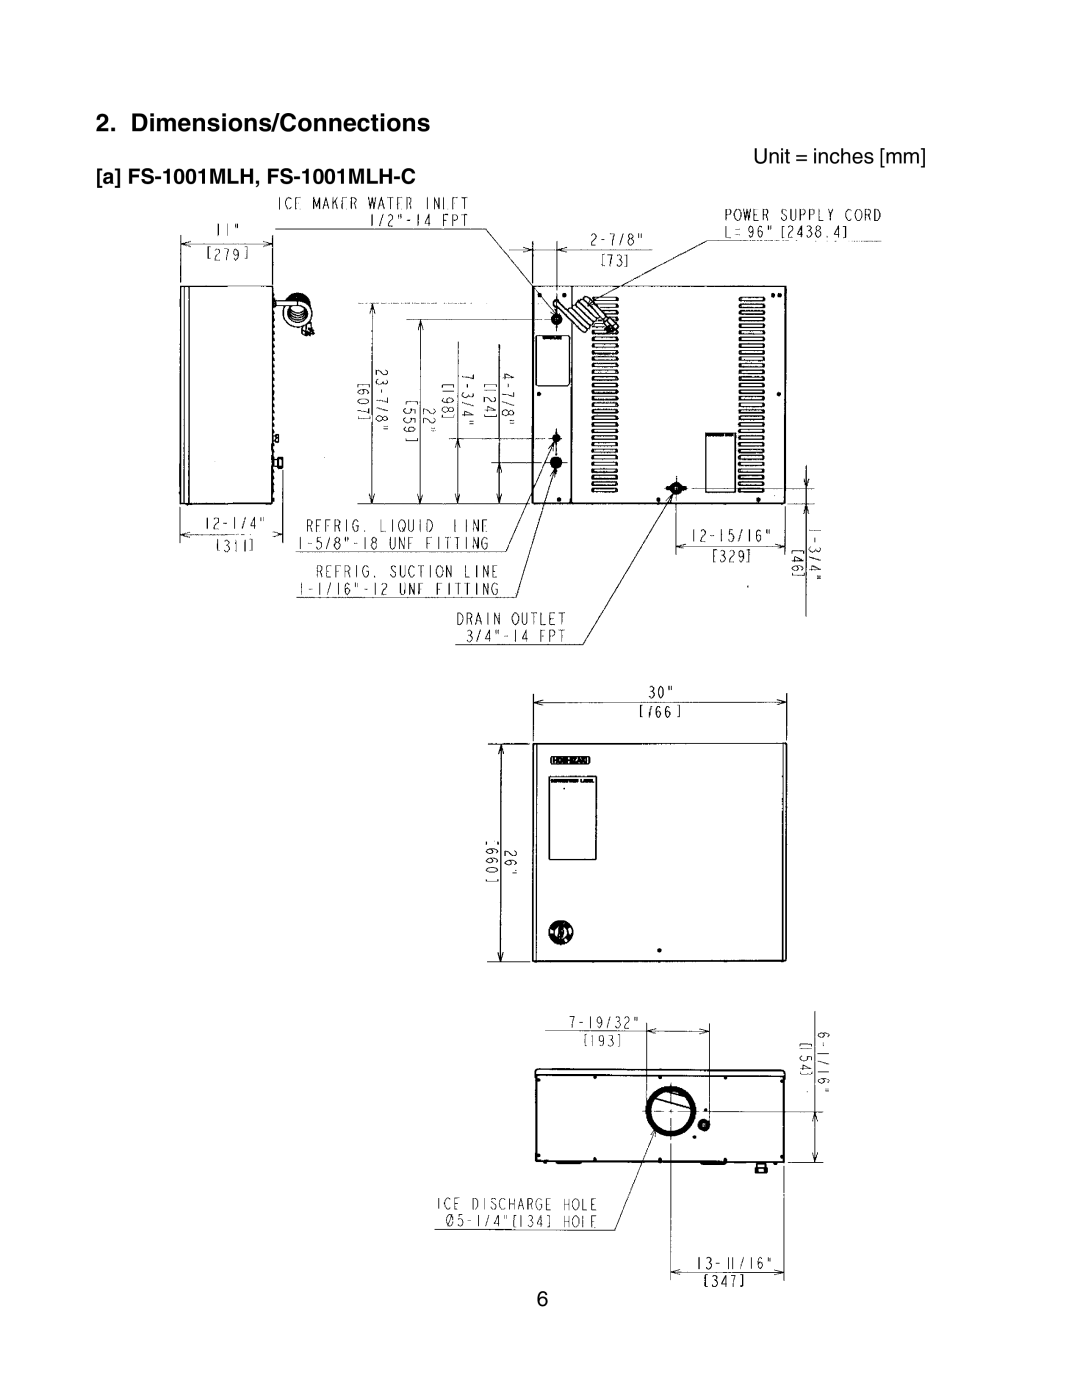 Hoshizaki SRC-10H instruction manual Dimensions/Connections, Unit = inches mm 